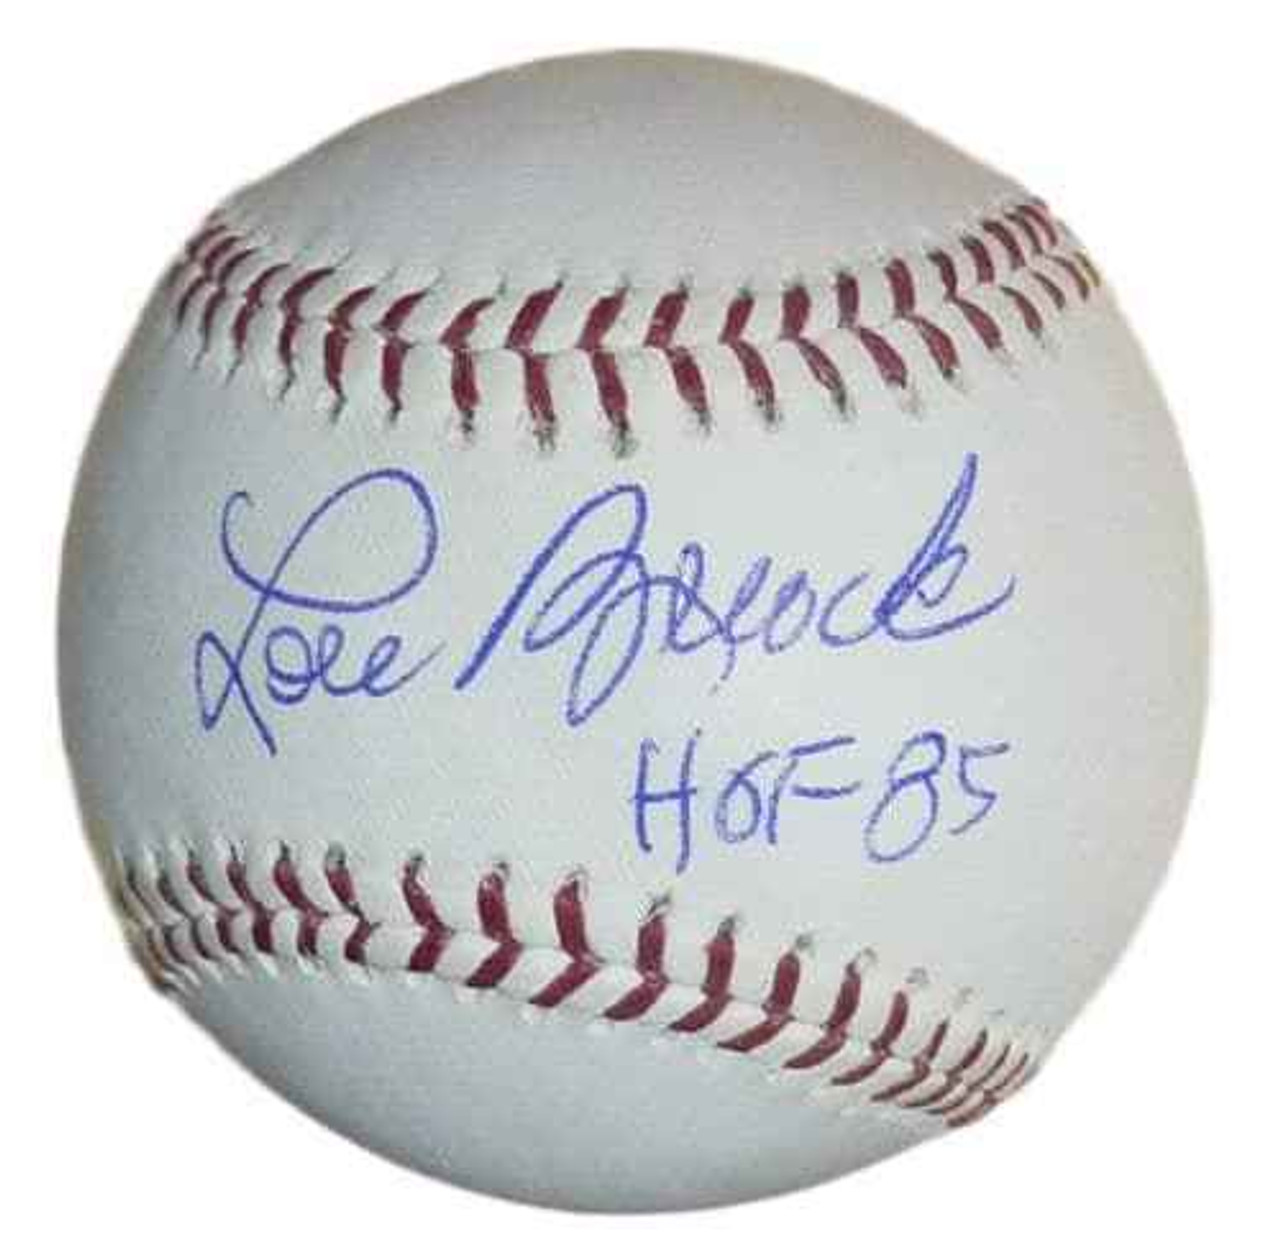 Denver Autographs 10650 MLB St. Louis Cardinals with HOF 85 Lou Brock Autographed Baseball, Blue